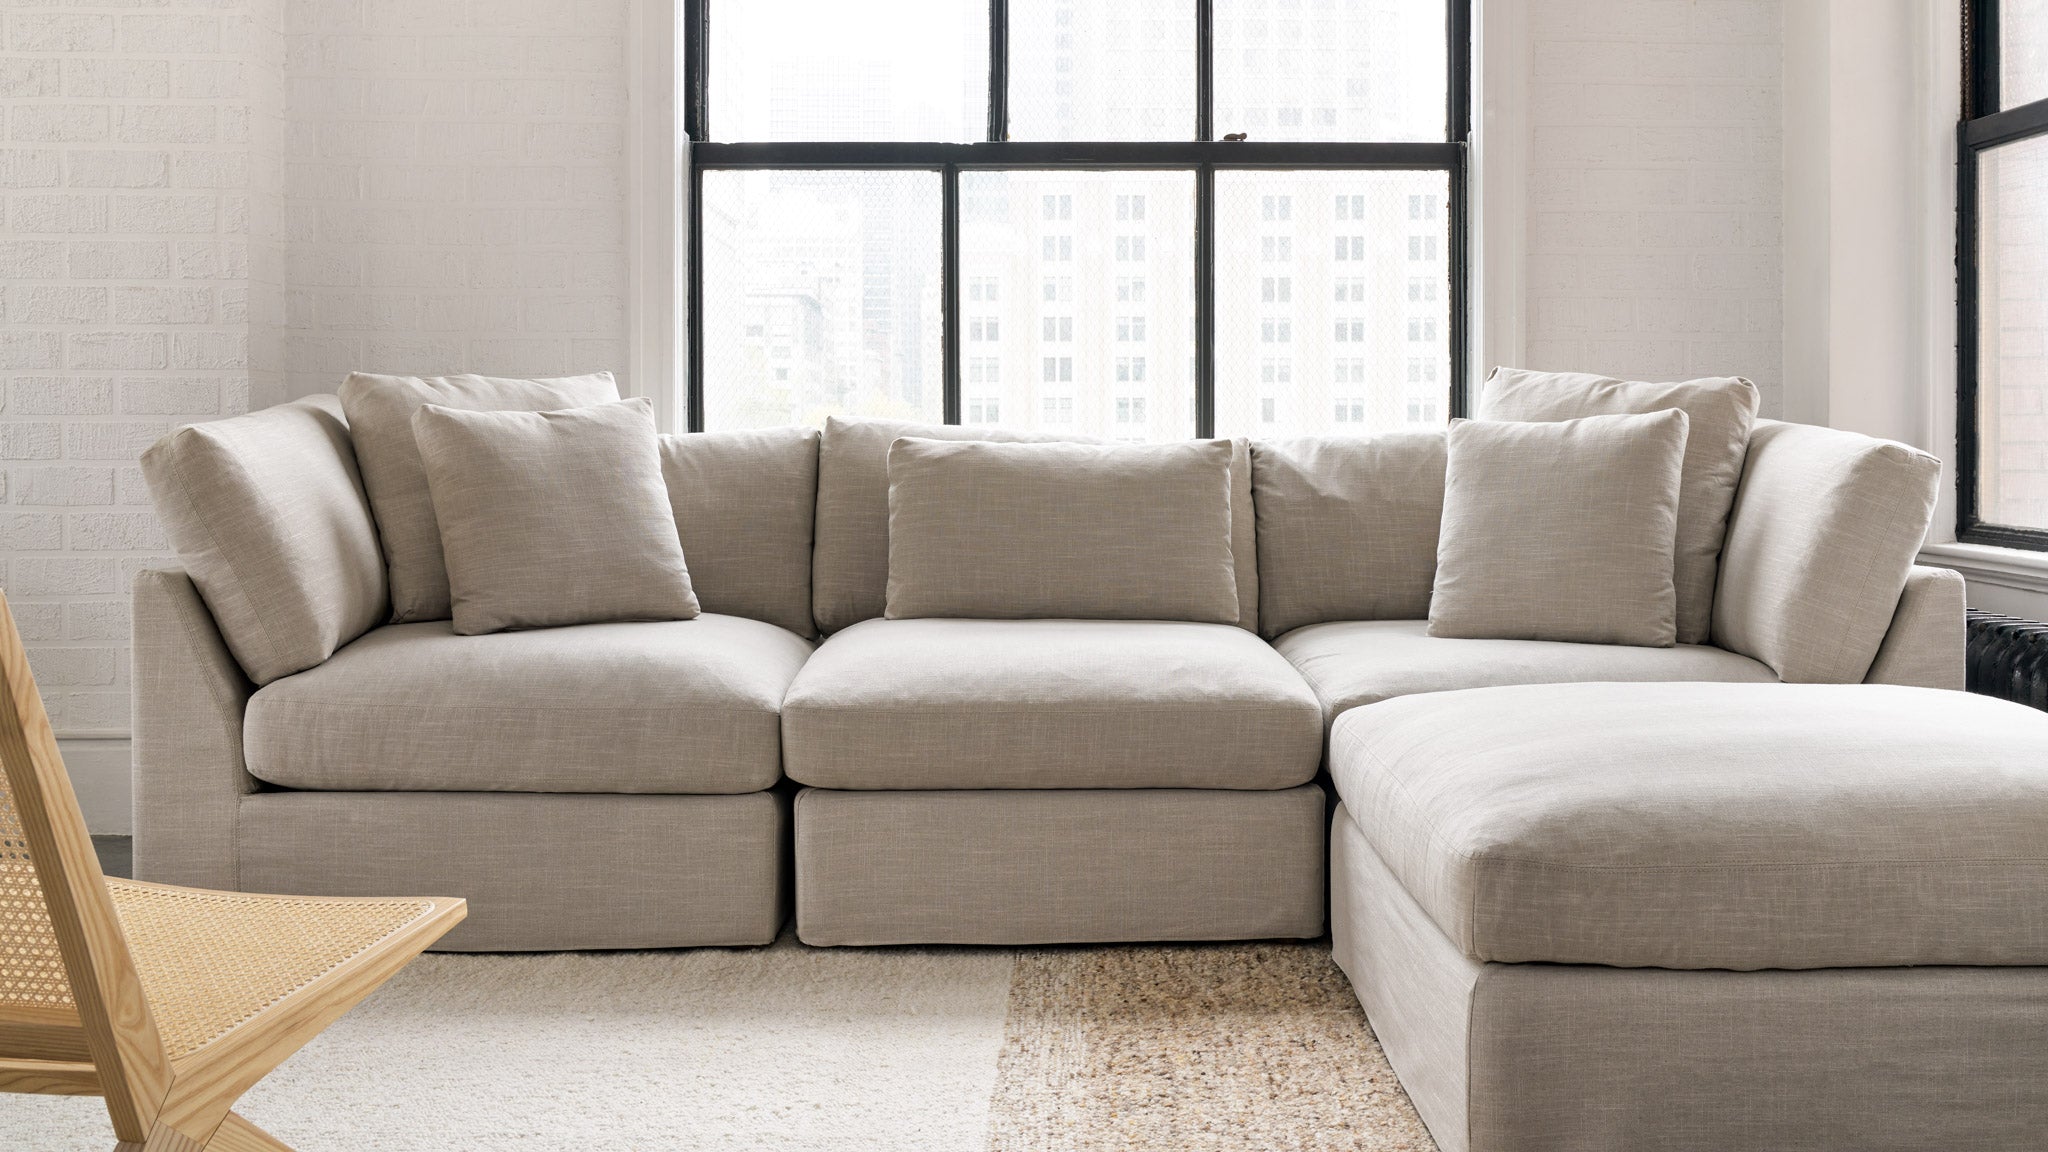 Get Together™ 2-Piece Modular Sofa, Standard, Light Pebble - Image 7